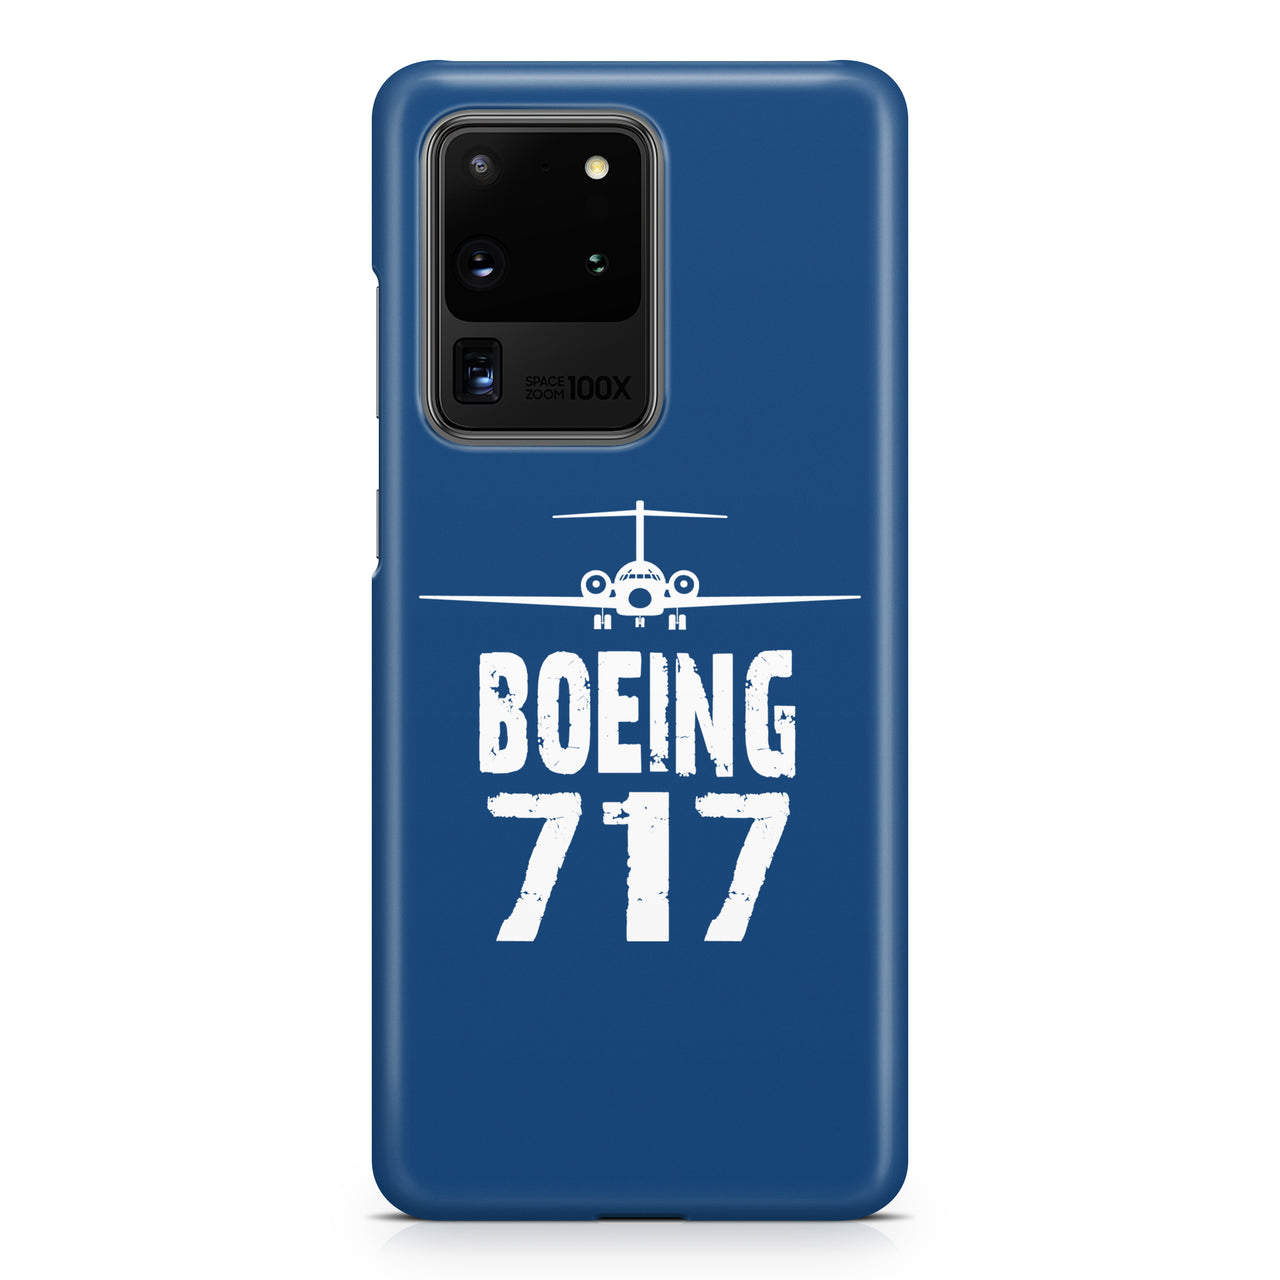 Boeing 717 & Plane Samsung A Cases